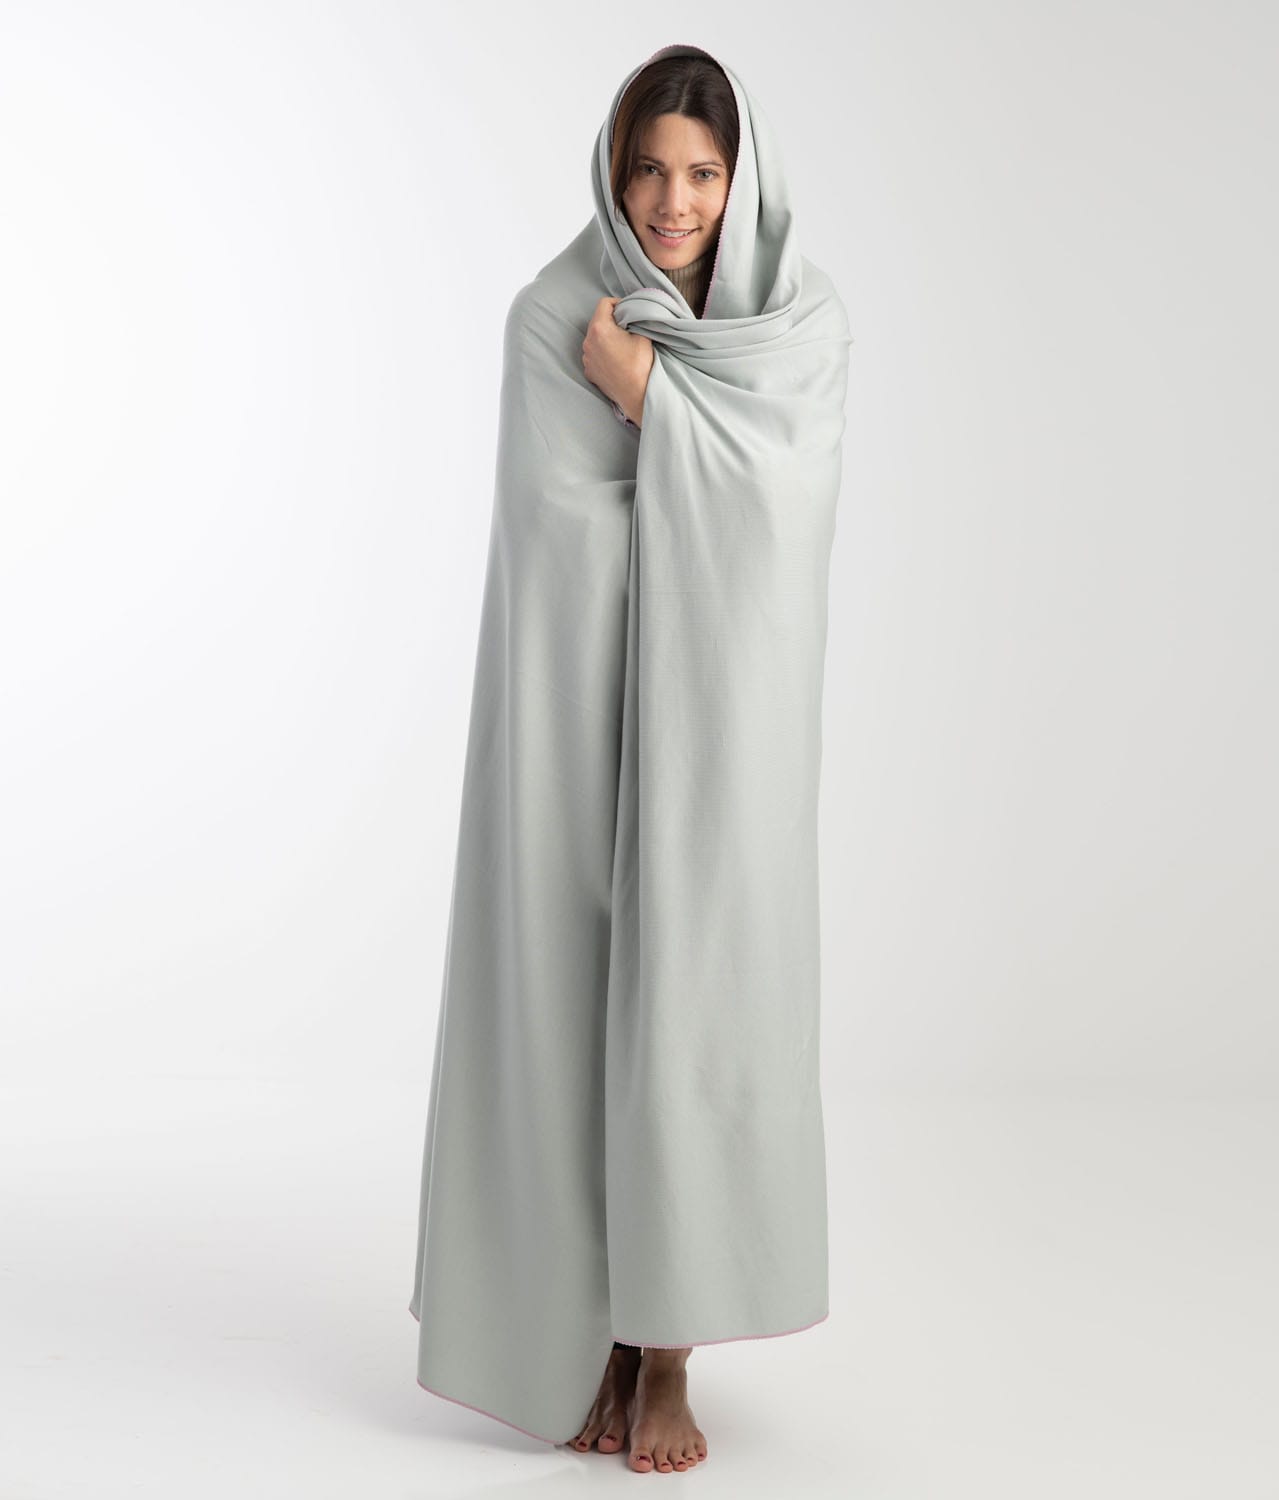 EMF Protective Travel Blanket from Leblok®